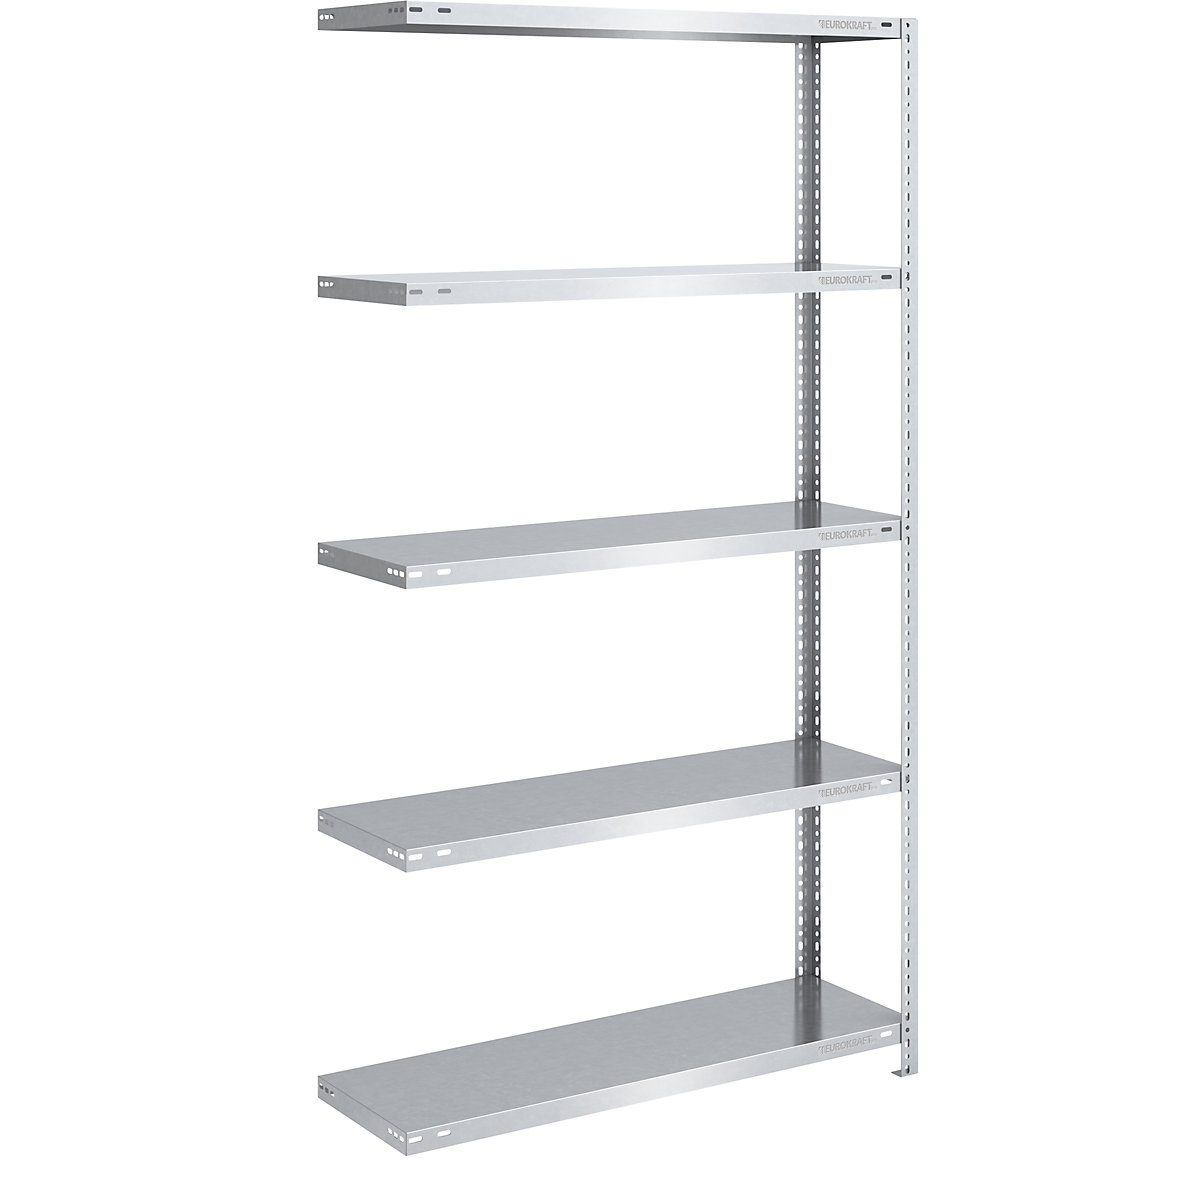 Bolt-together shelf unit, light duty, zinc plated – eurokraft pro, shelf unit height 2000 mm, shelf width 1000 mm, depth 400 mm, extension shelf unit-7